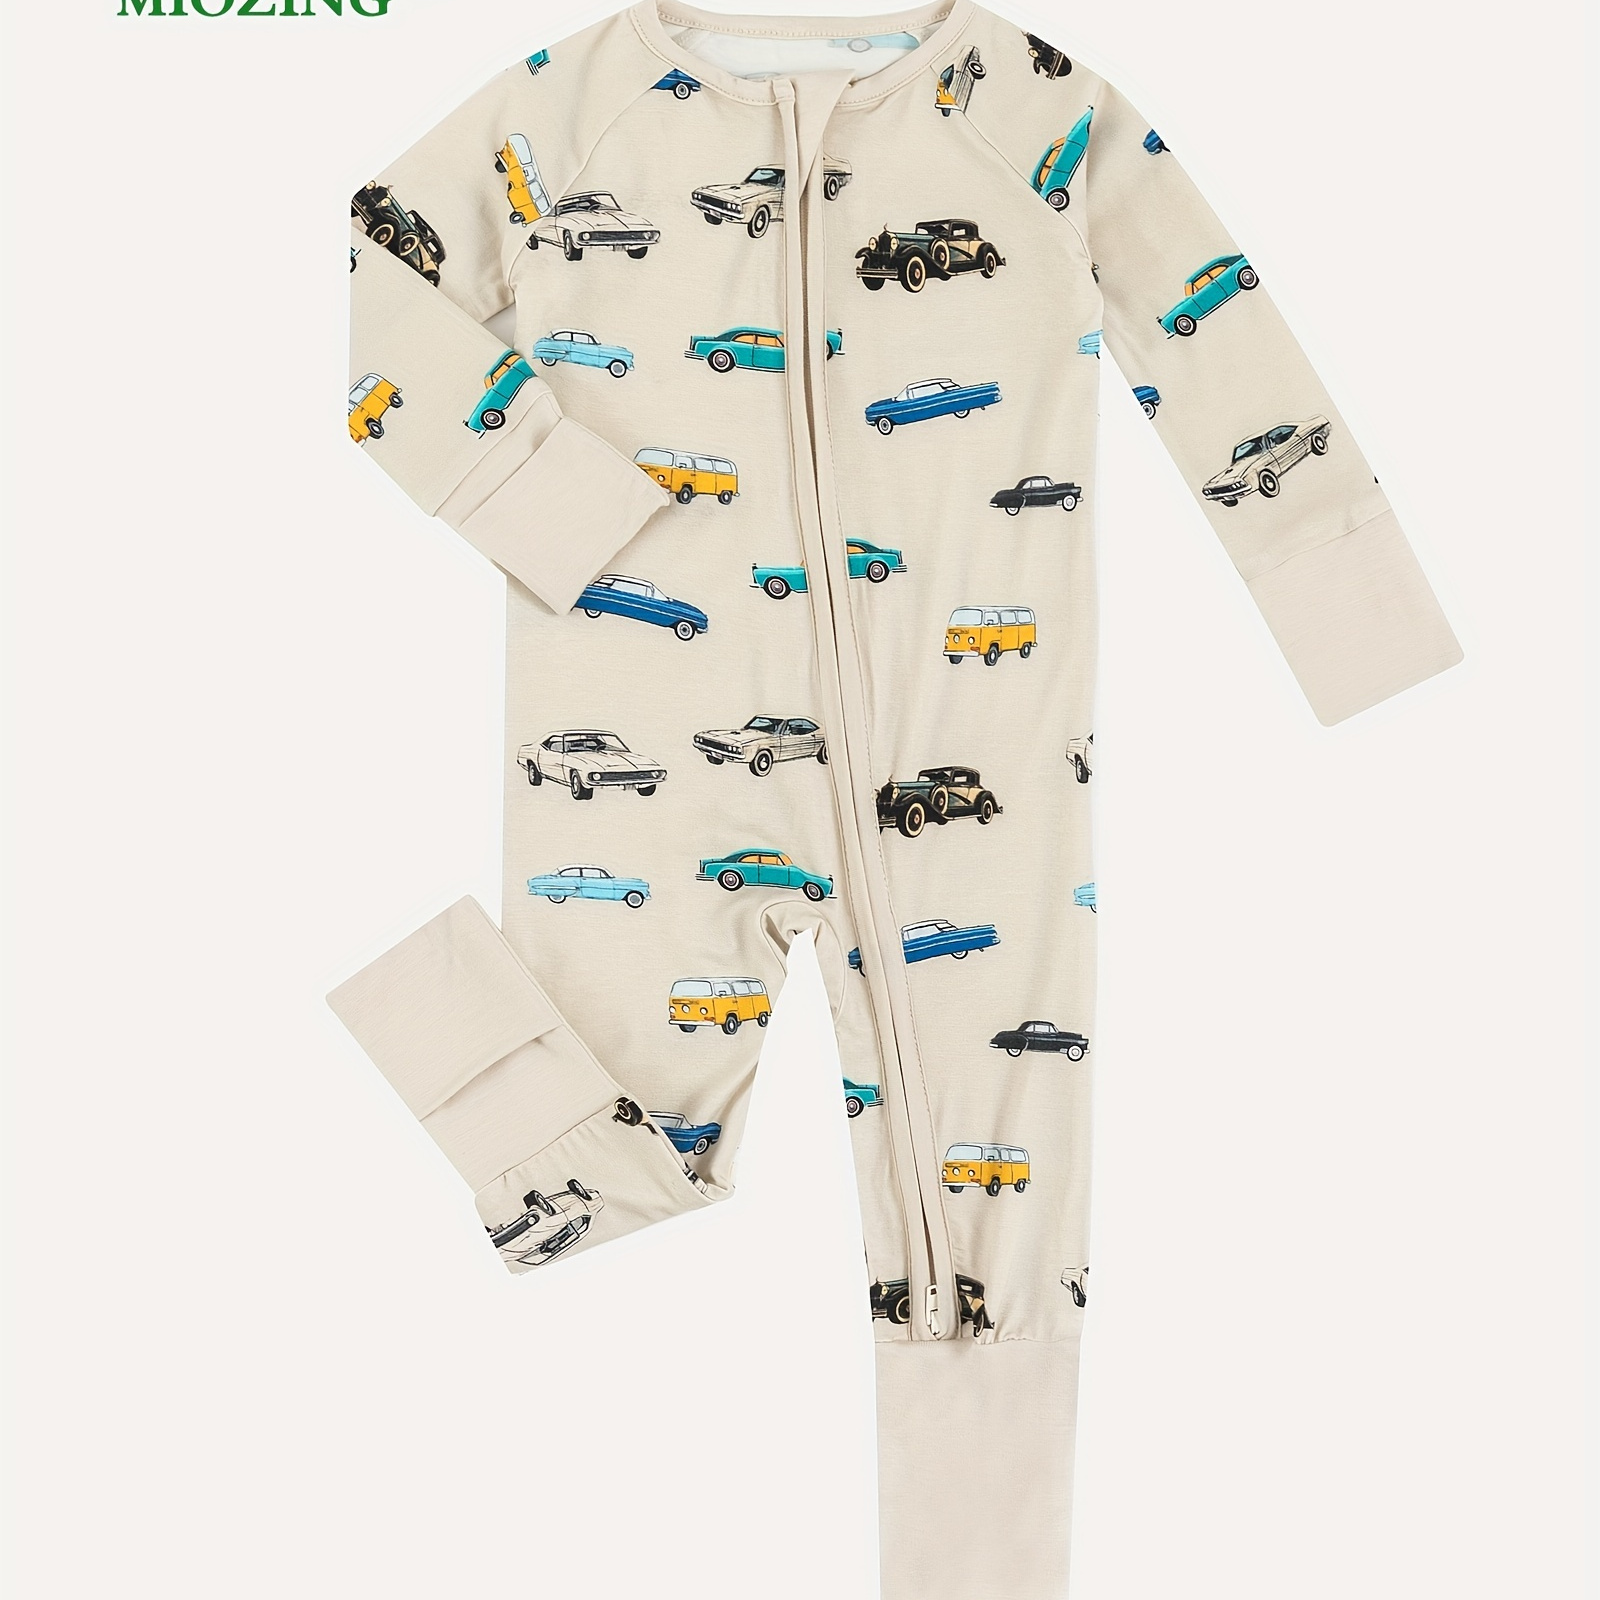 

Miozing Bamboo Fiber Bodysuit For Infants, Cartoon Bus Car Pattern Long Sleeve Onesie, Baby Girl's Clothing